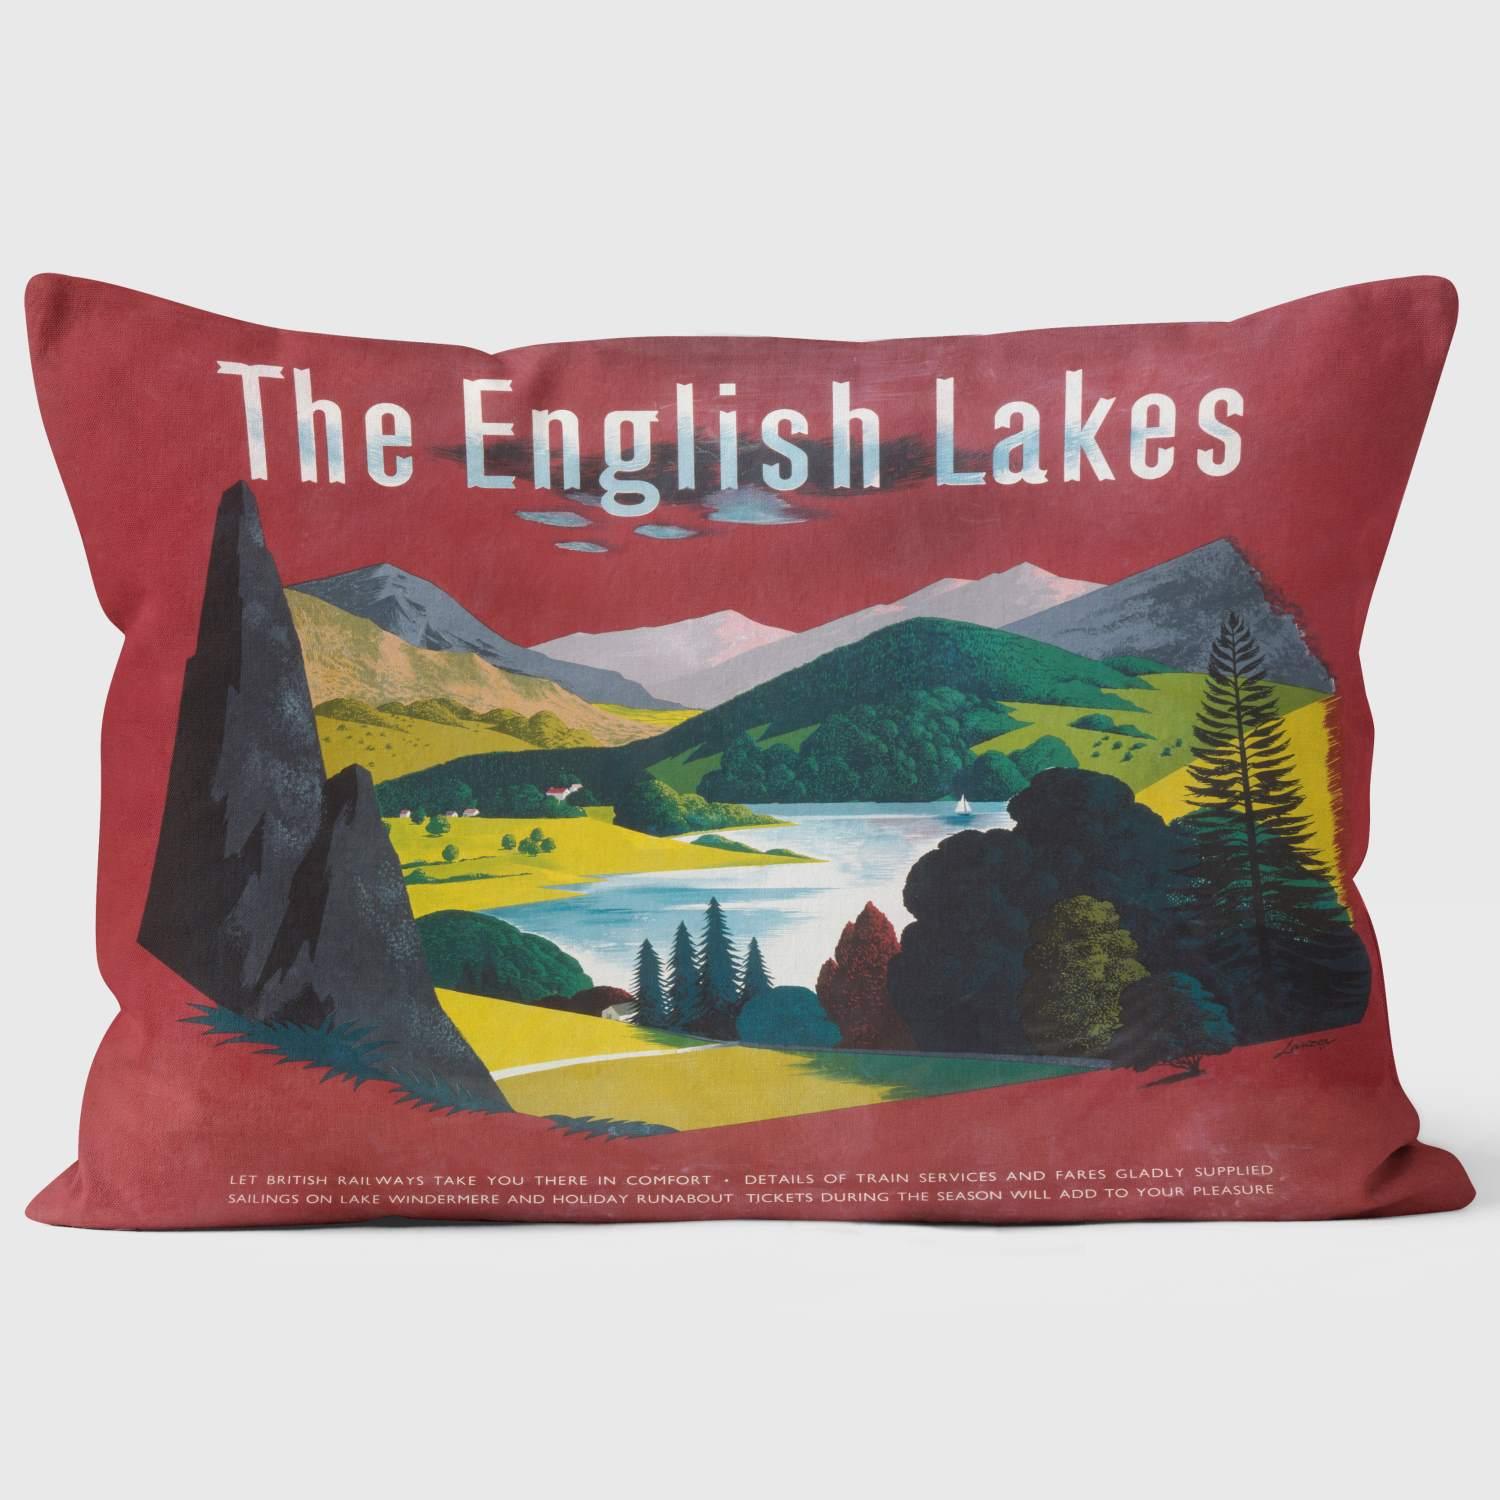 The English Lakes BR (LMR) 1950s - National Railway Museum Cushion - Handmade Cushions UK - WeLoveCushions